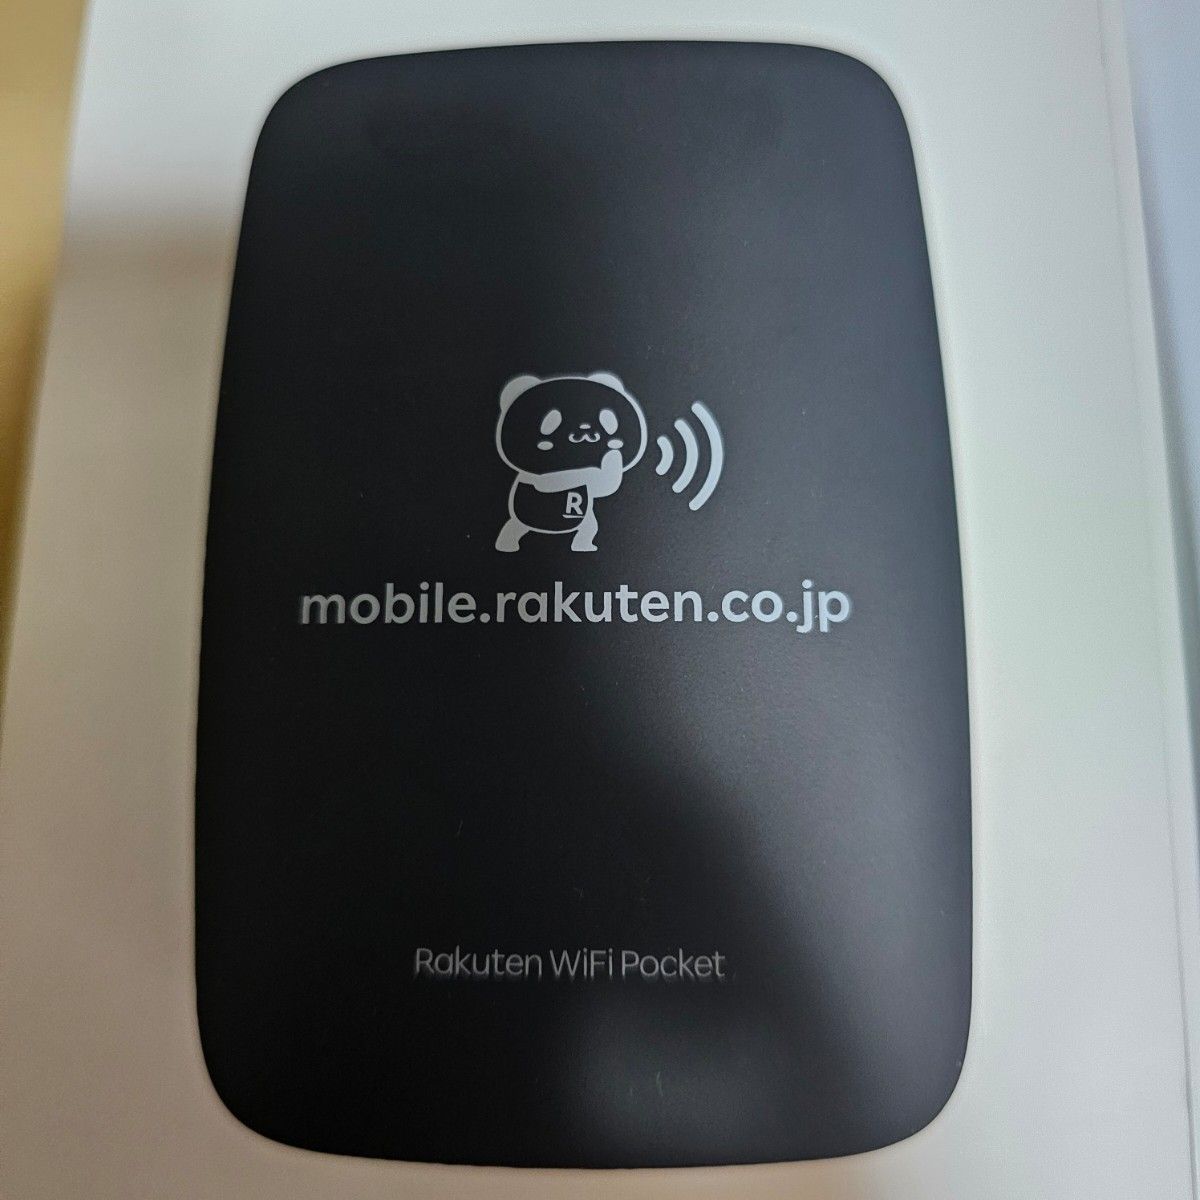 Rakuten WiFi Pocket R310 Wi-Fi ポケットWi-Fi 楽天Wi-Fiルーター 黒 ブラック A5180